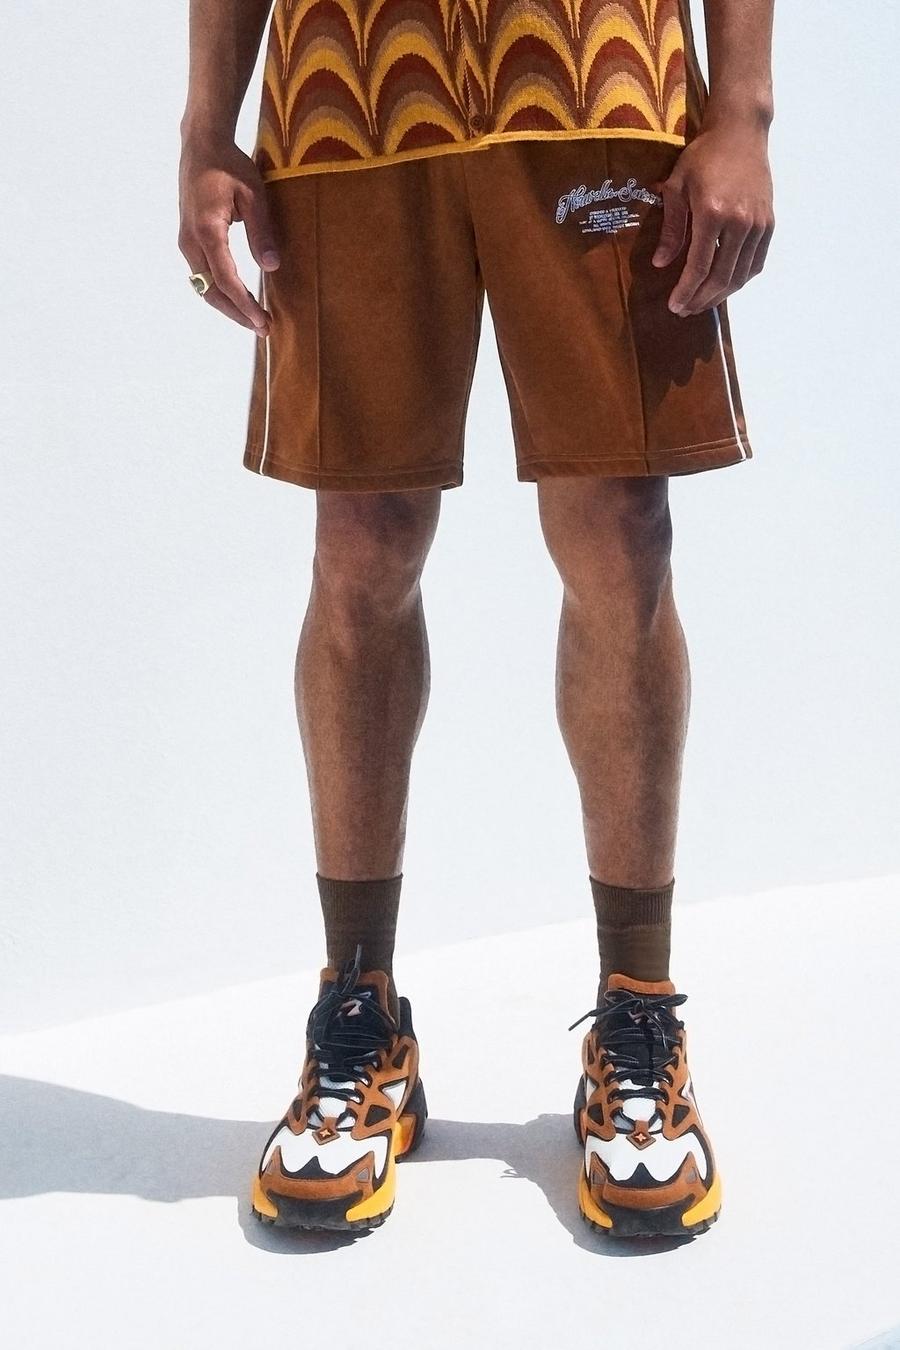 Lockere Nouvelle Saison Trikot-Shorts, Chocolate brown